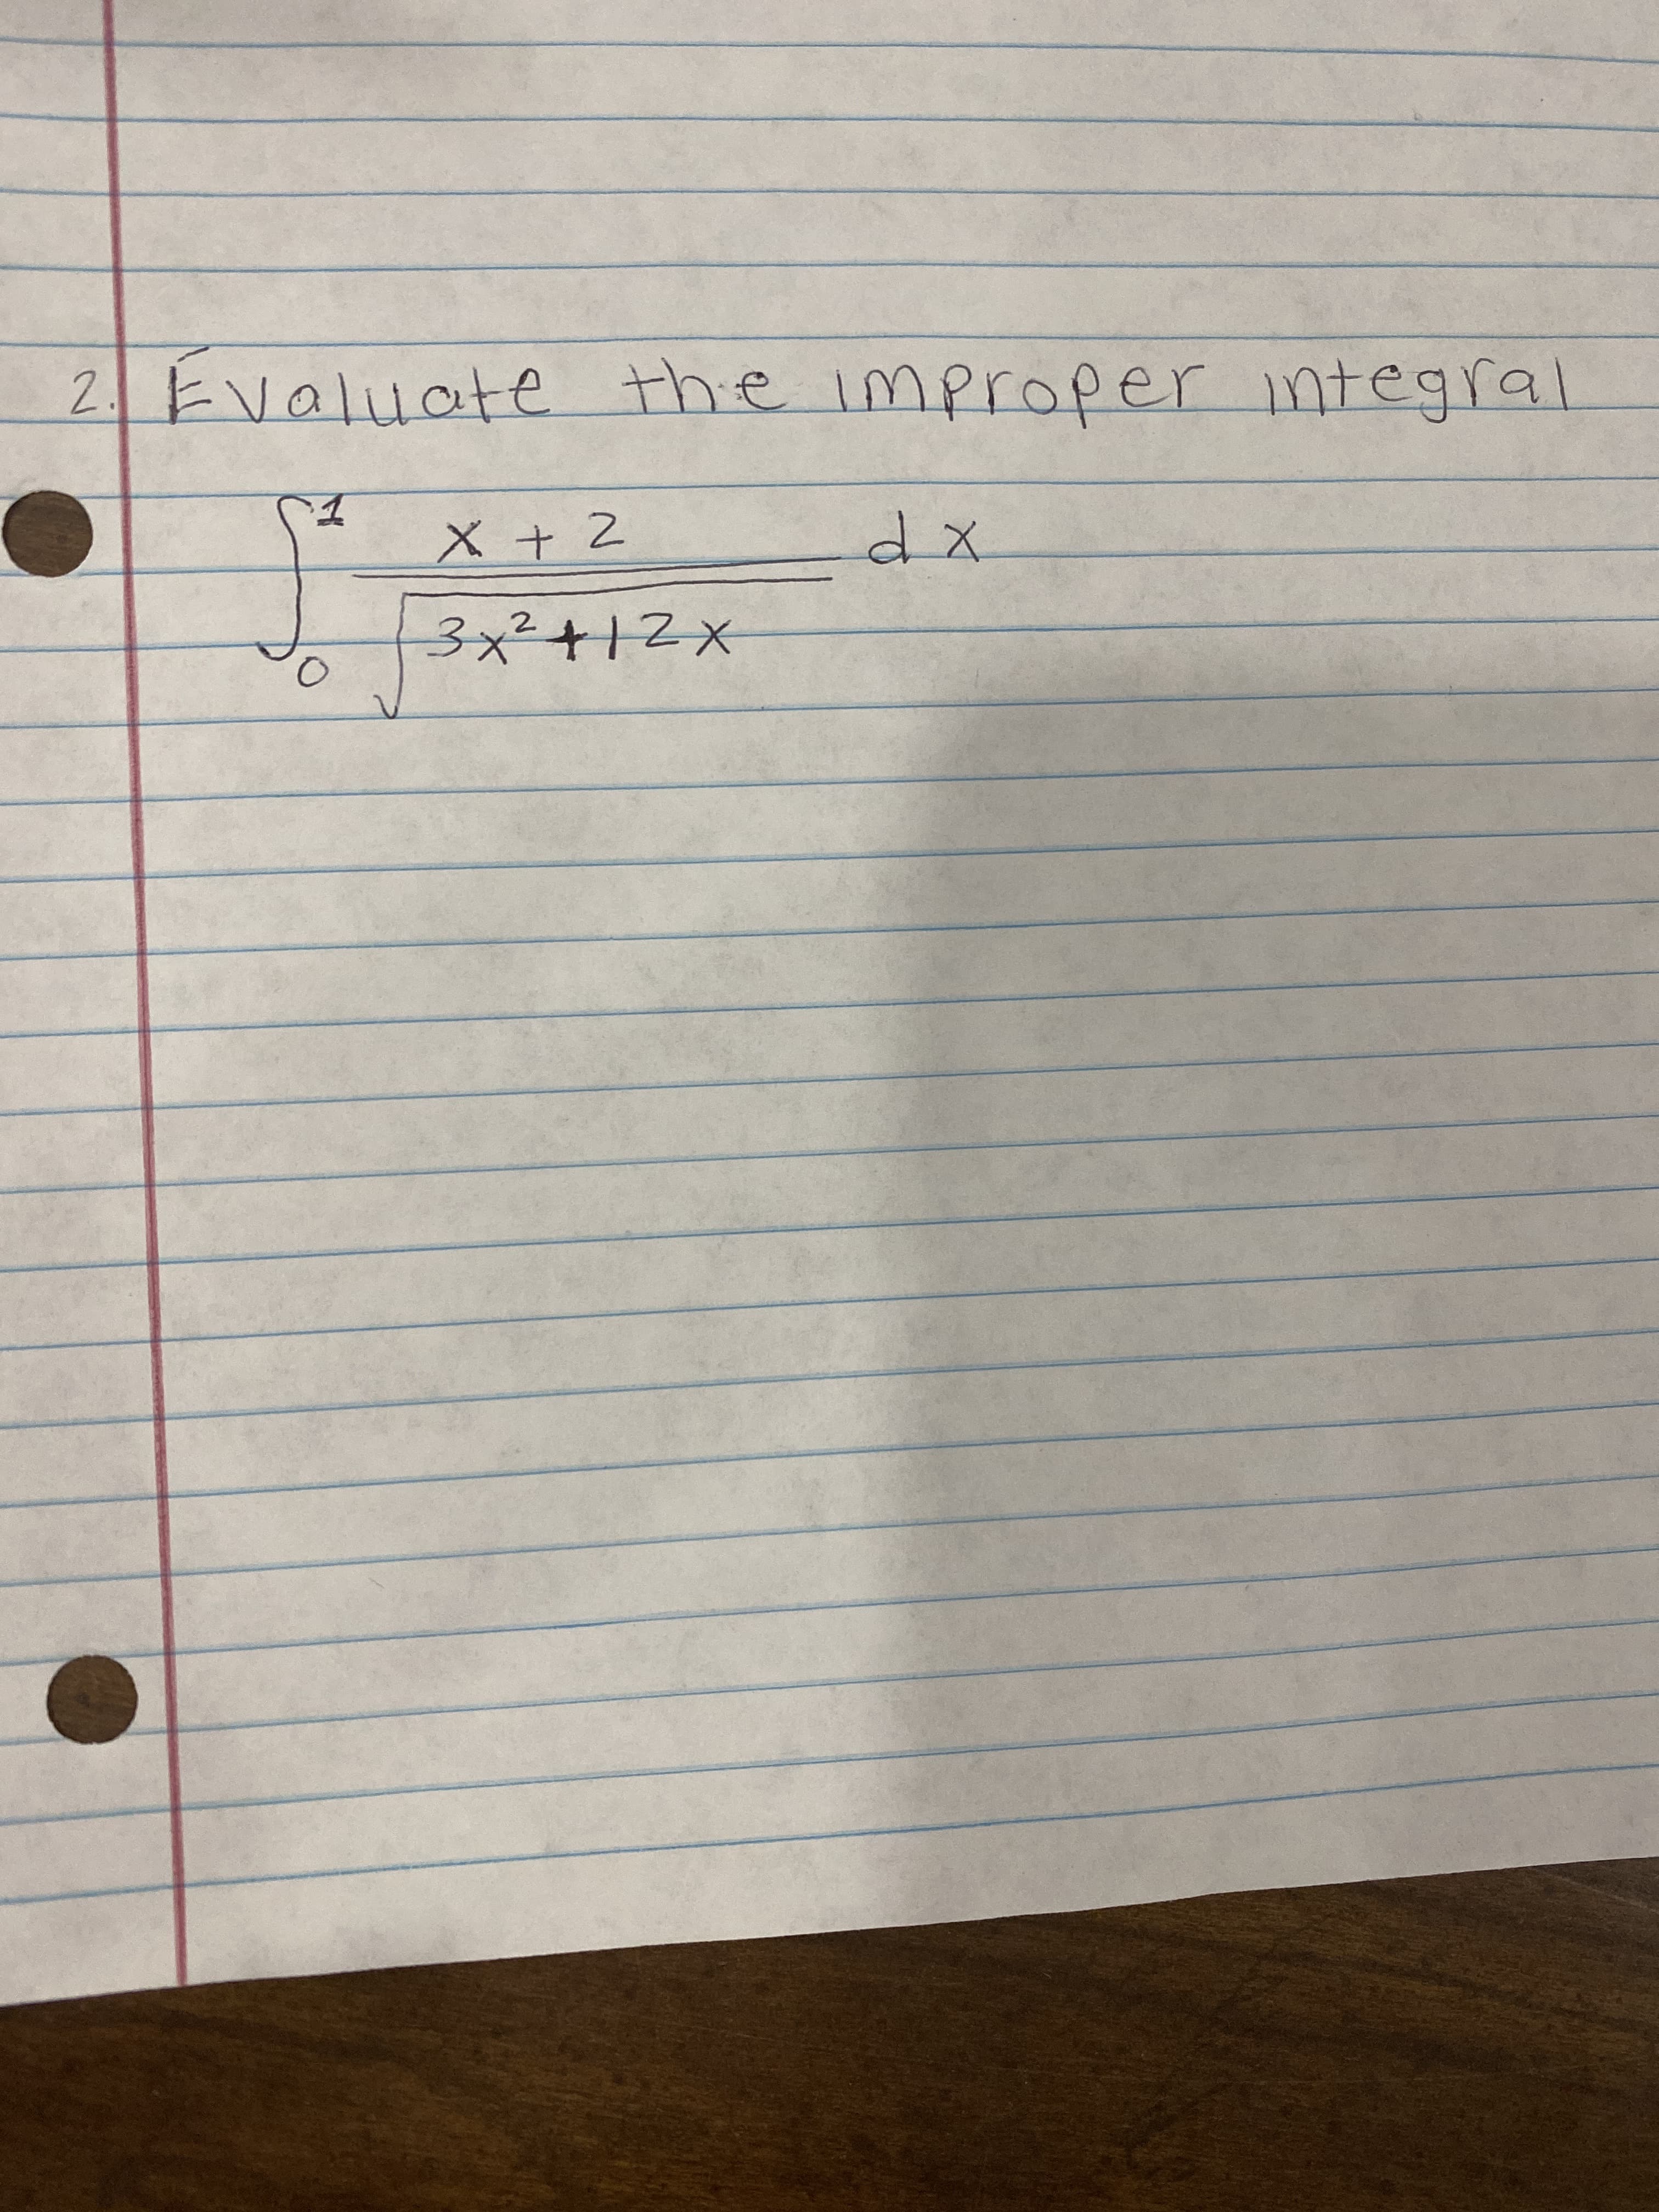 2Evaluate the improper integral
X+2
dx
3x²412X
